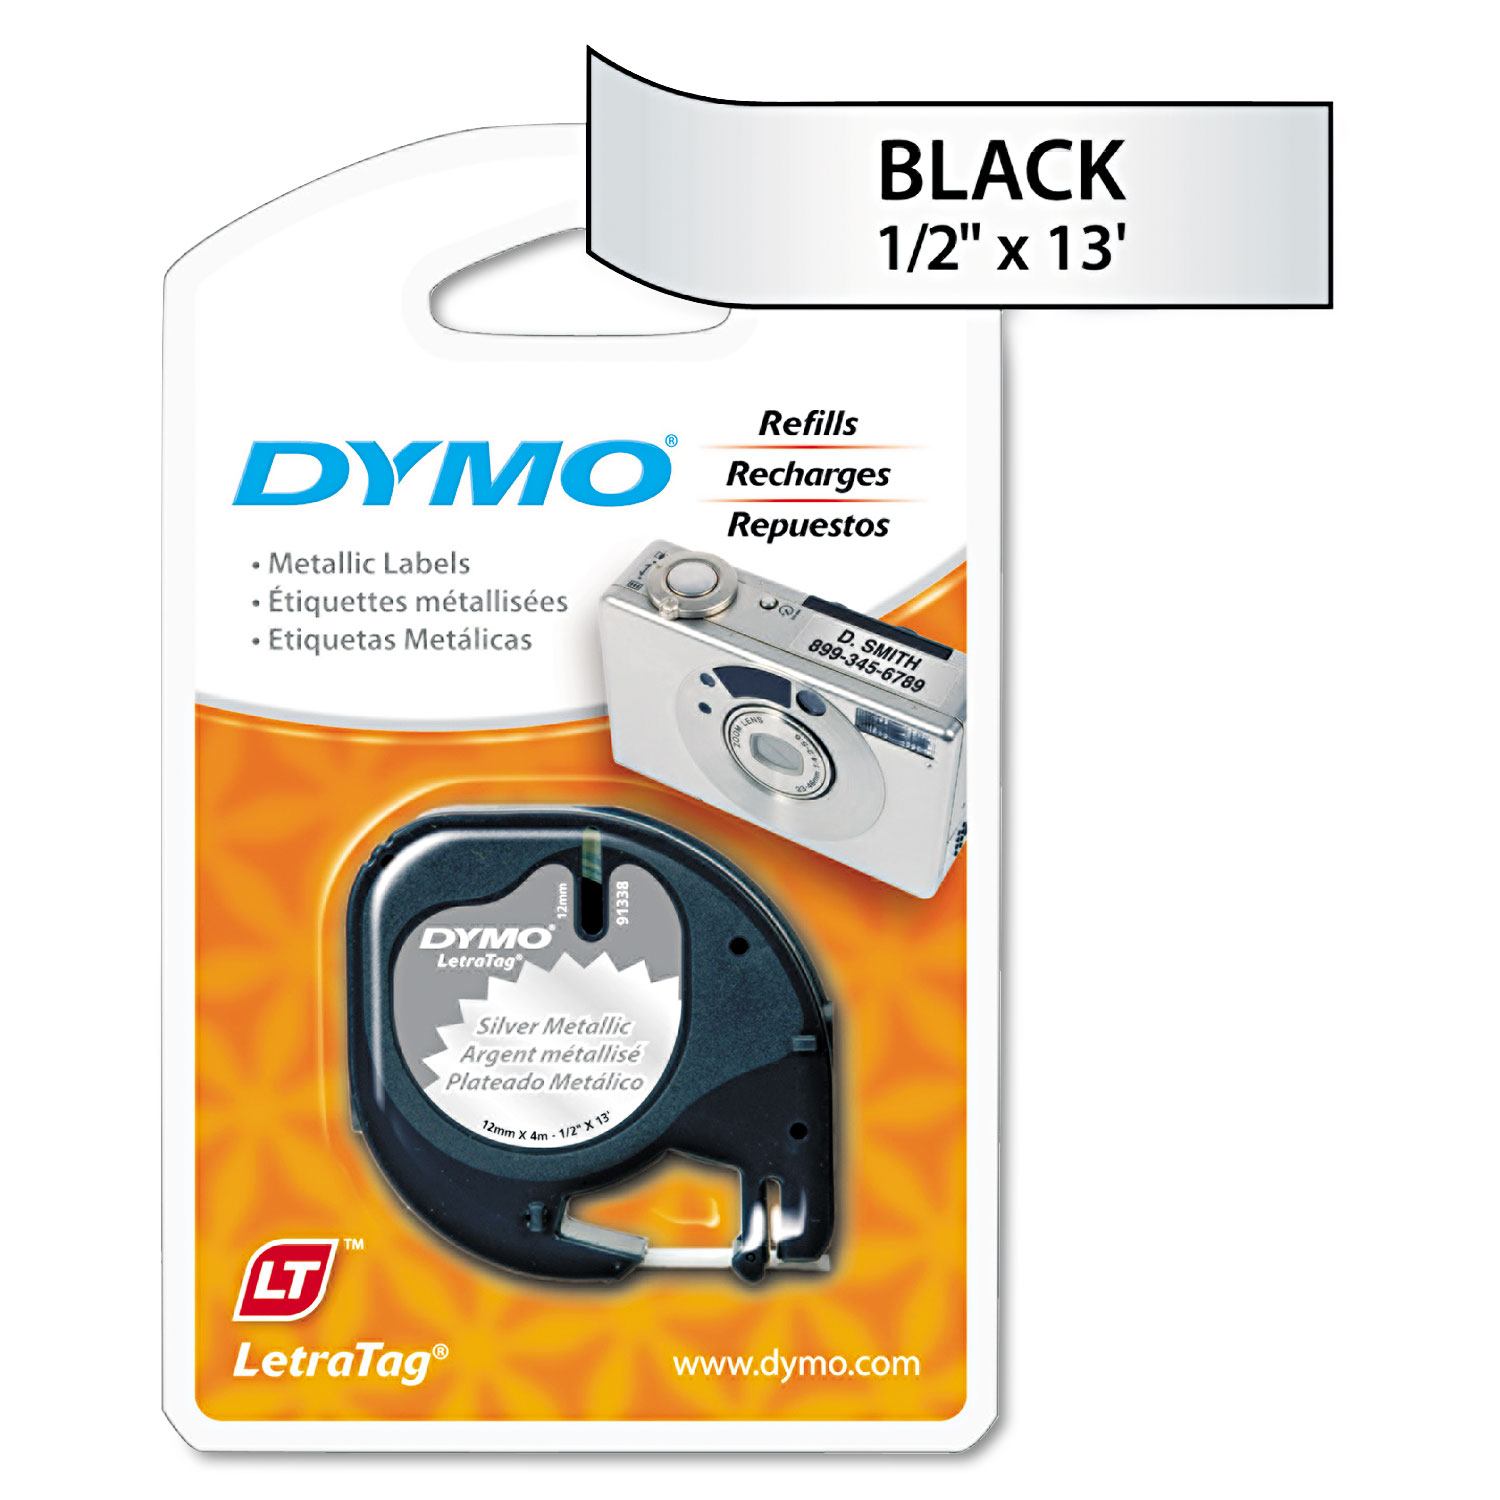  DYMO 91338 LetraTag Metallic Label Tape Cassette, 0.5 x 13 ft, Silver (DYM91338) 